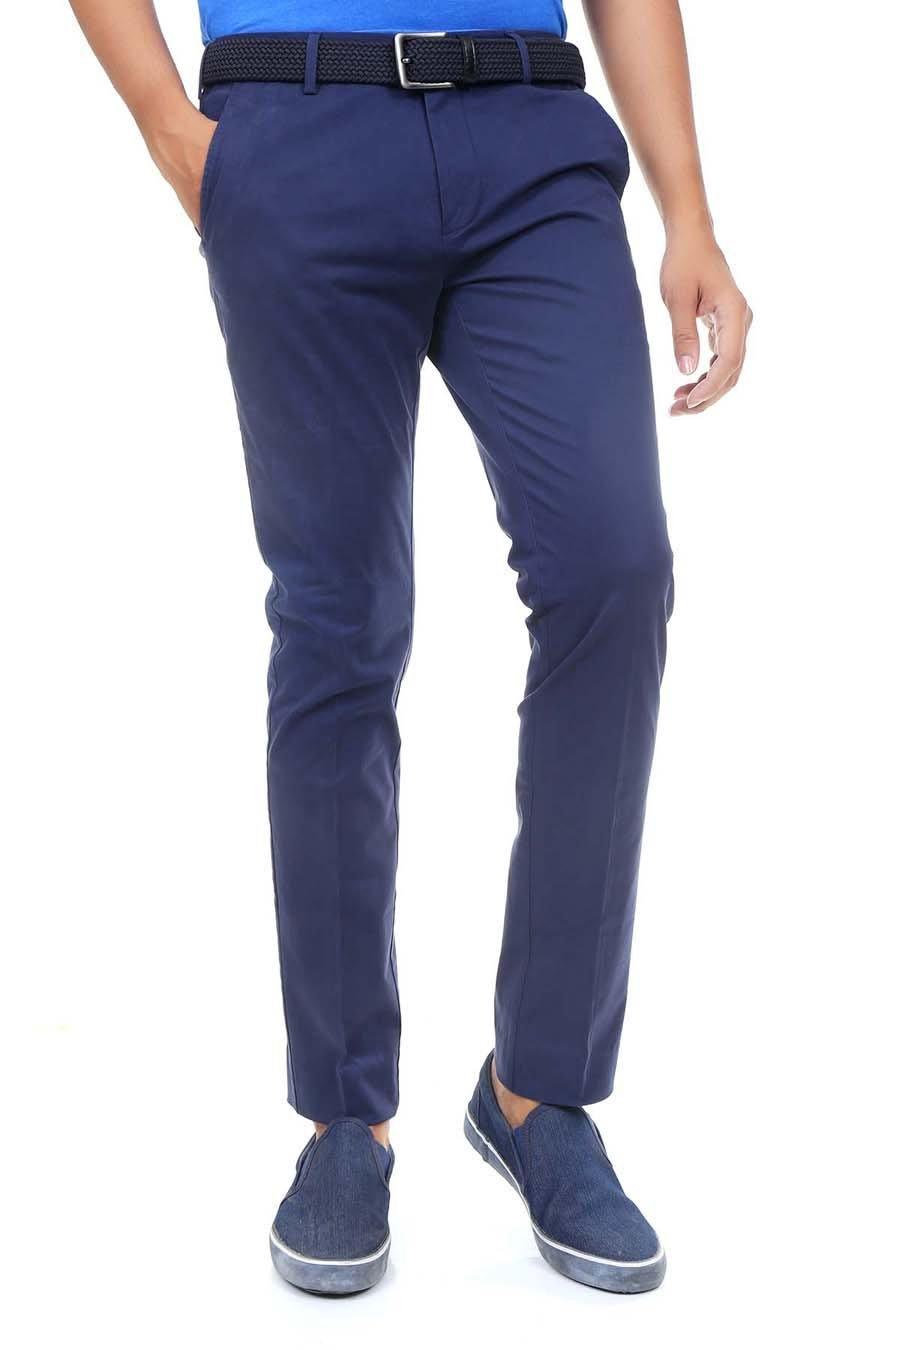 Casual Pant Cross Pocket Navy - Slim Fit at Charcoal Clothing